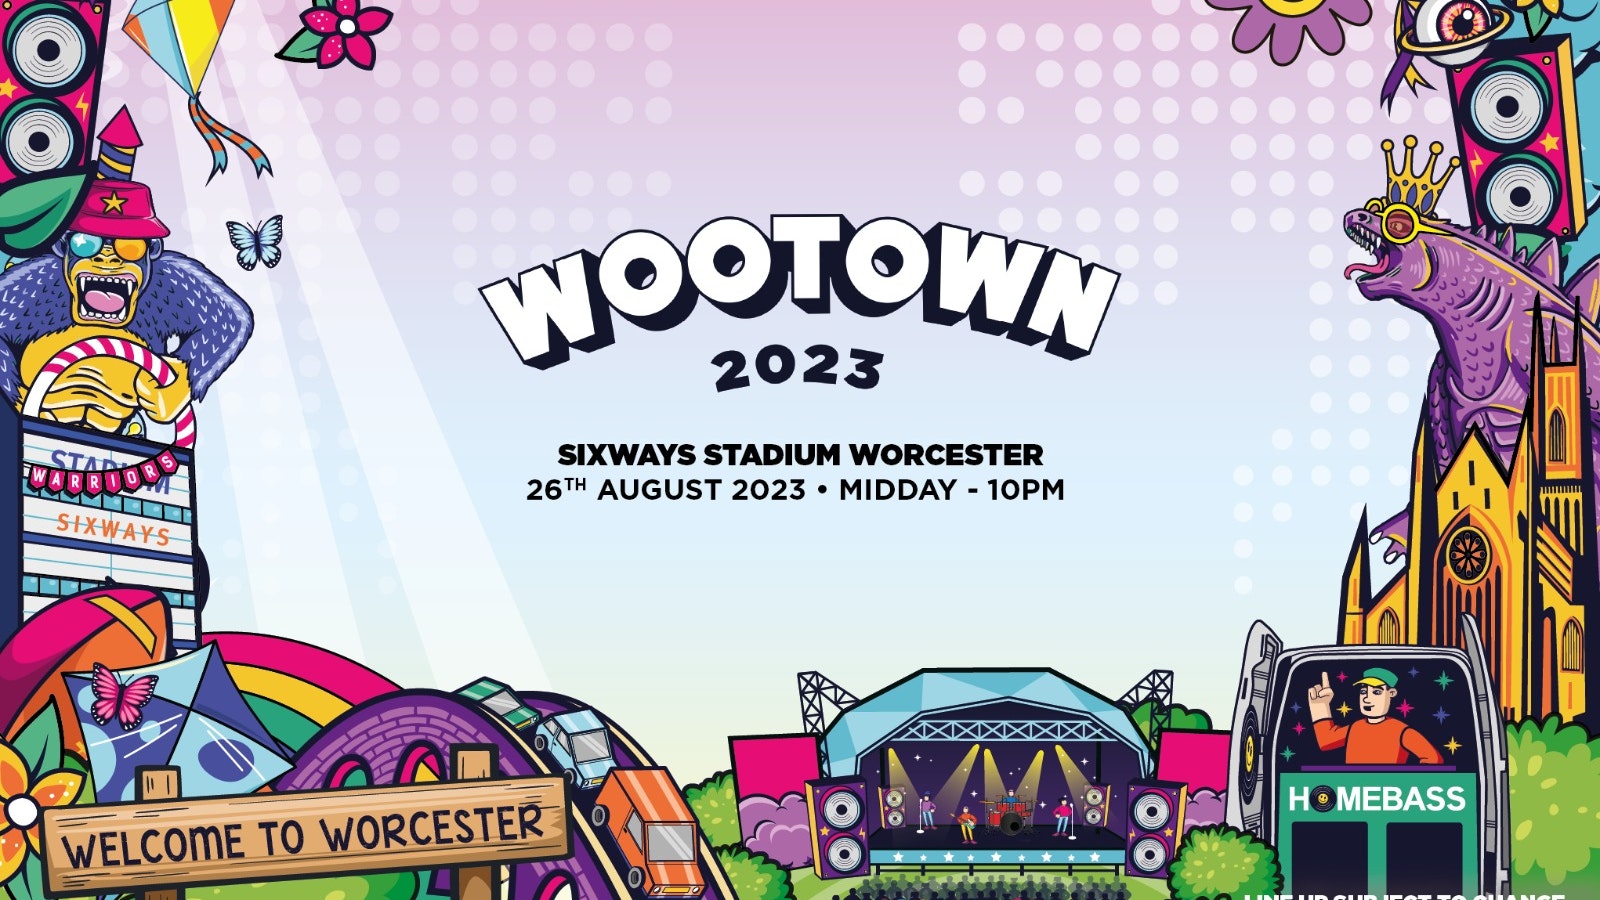 Wootown 2023